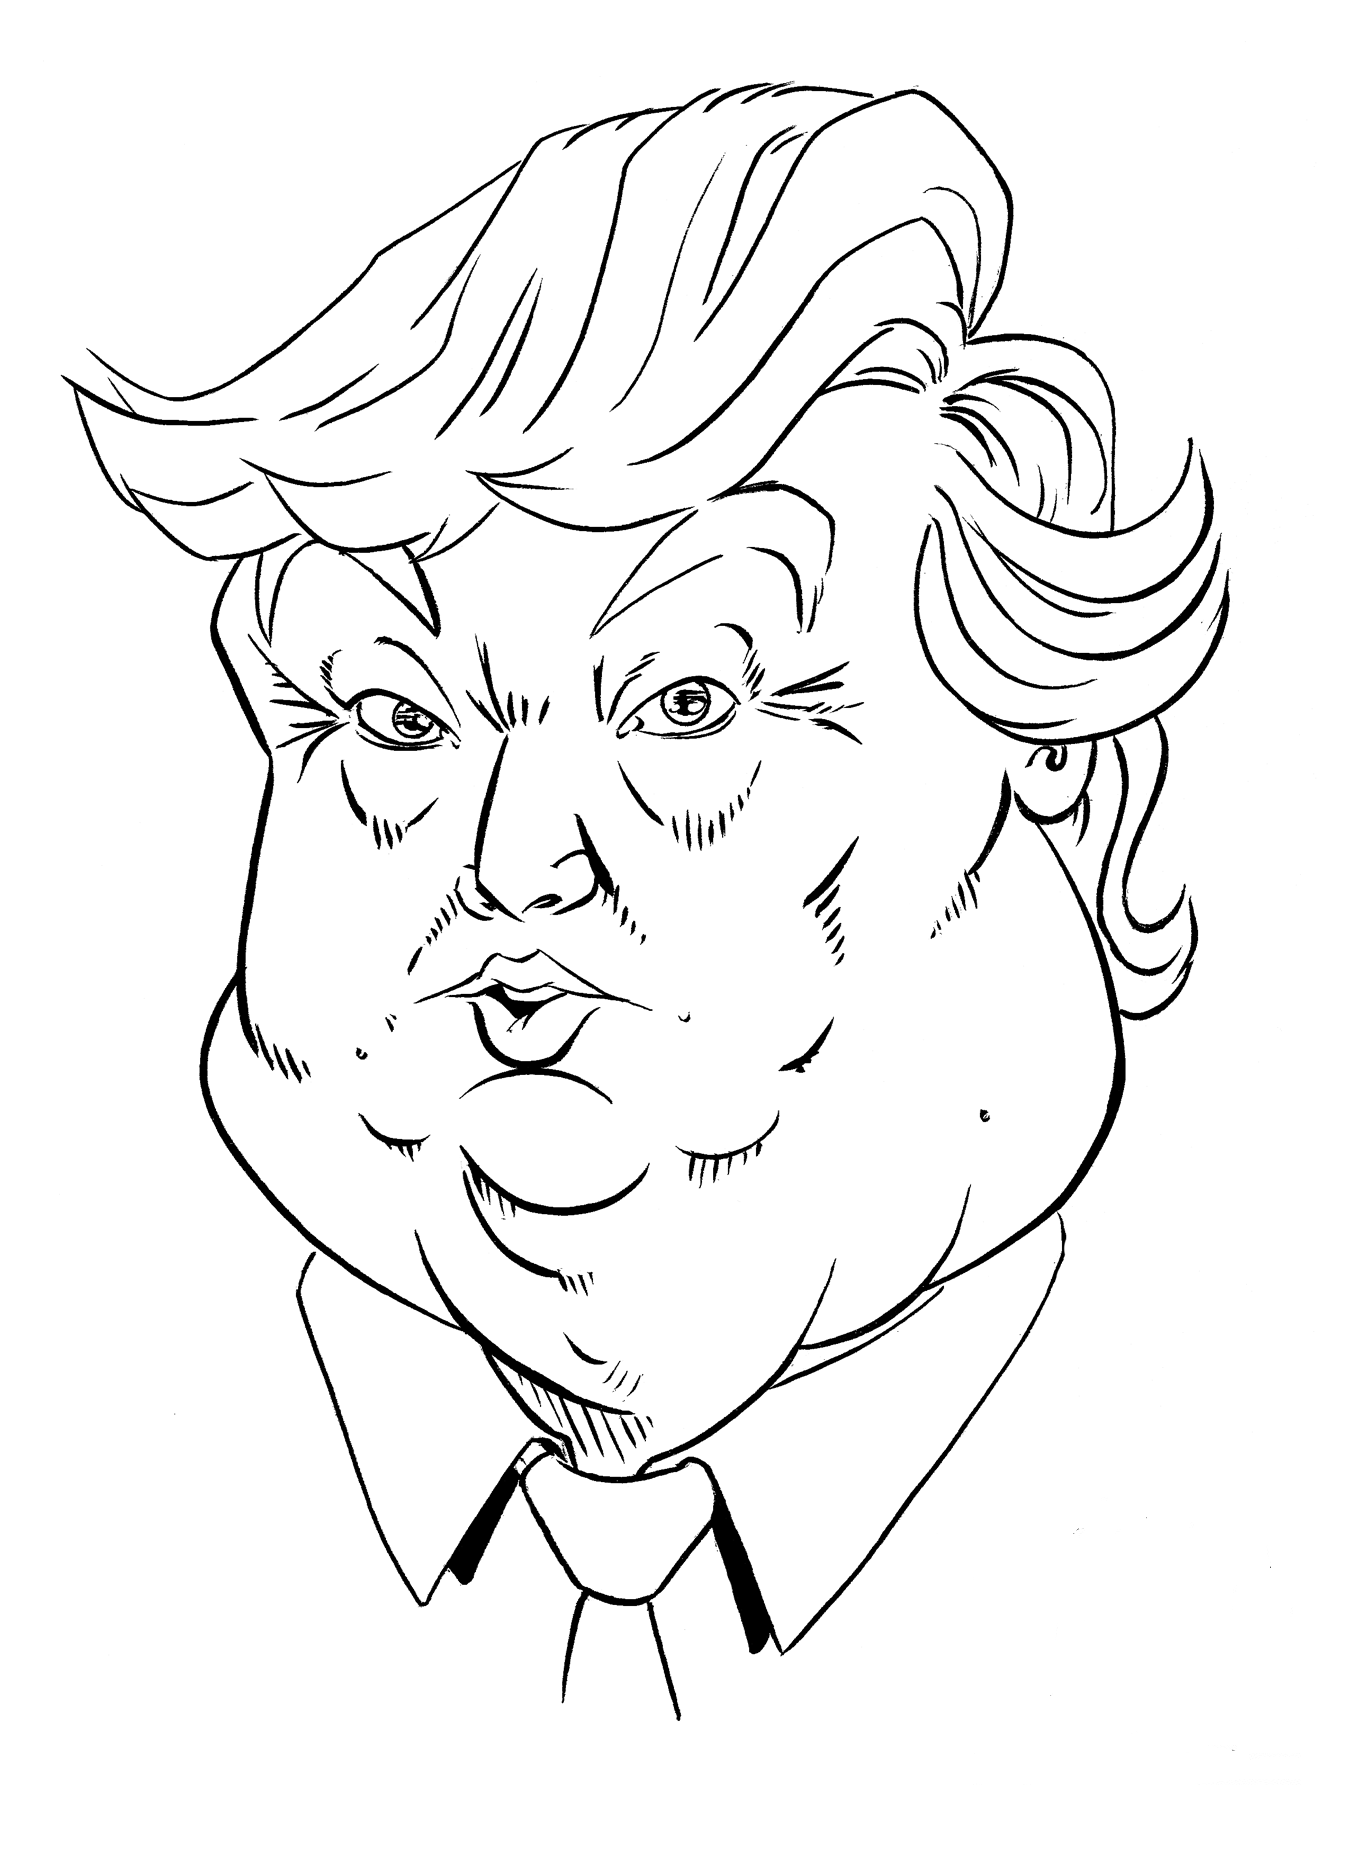 Donald Trump’s Fat Face